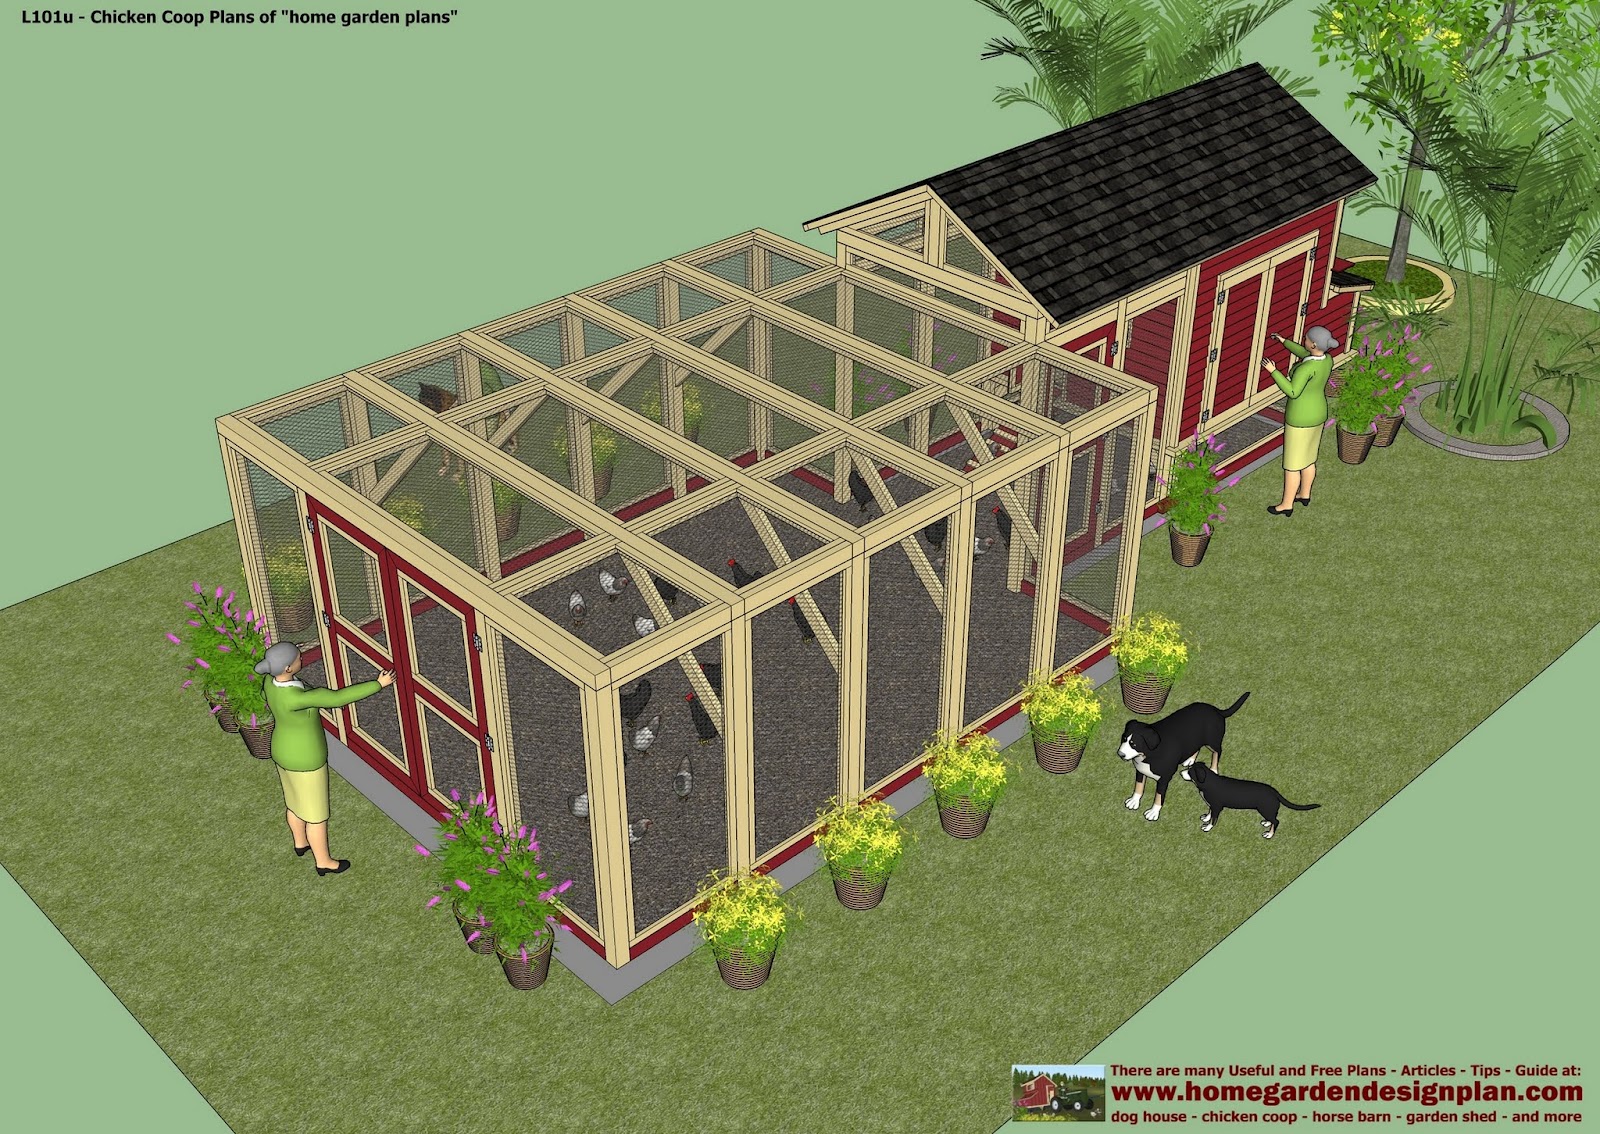 Chicken coop to build: Knowing Diy large chicken coop plans